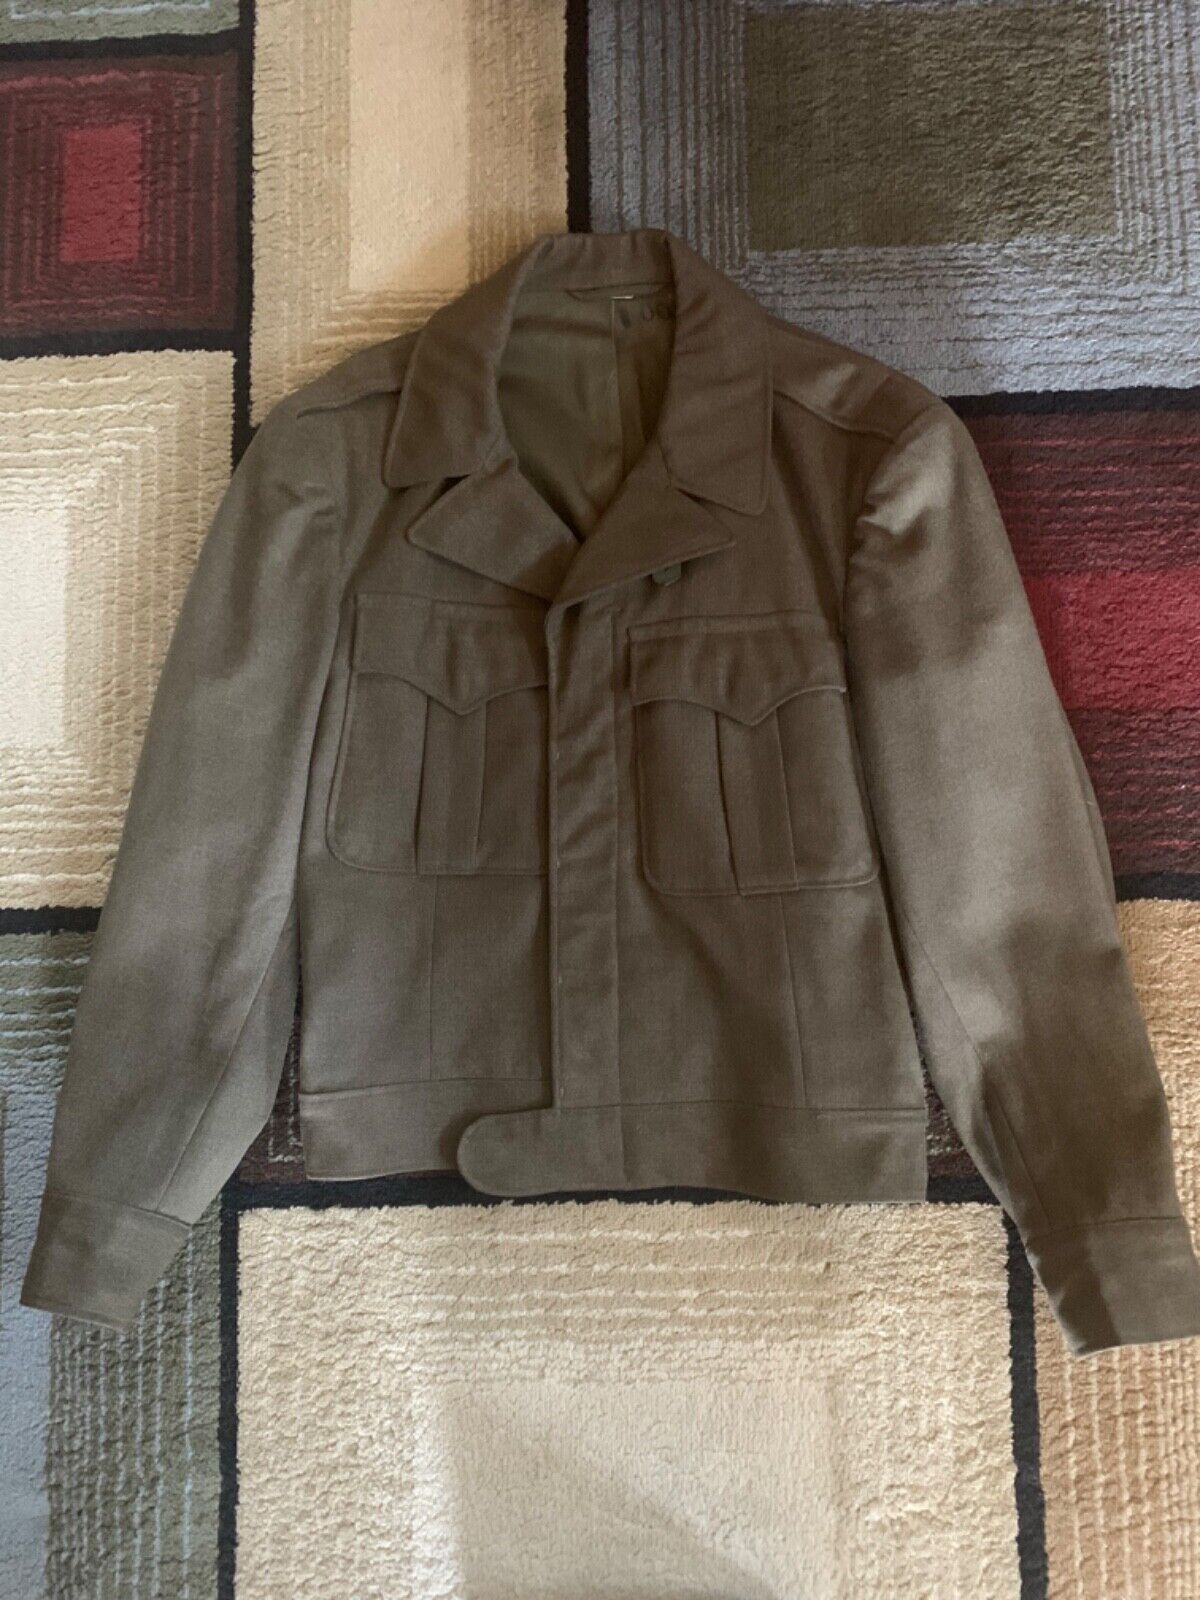 1940s WW2 World War II Era  Army Ike Jacket size 38S Excellent Cond